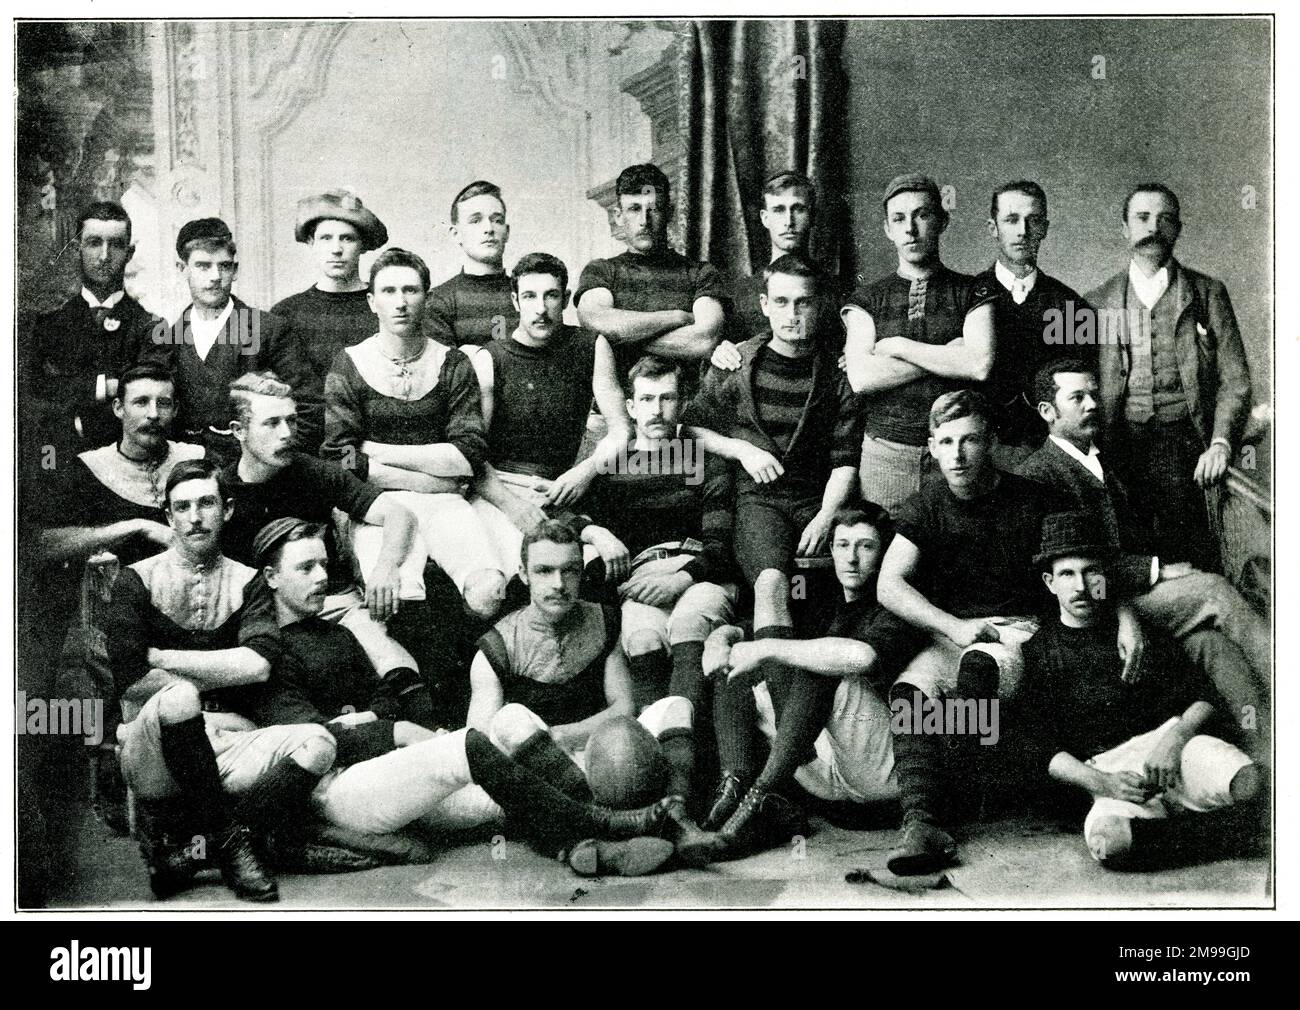 Foto de grupo, Queensland, Australia, equipo de rugby. Foto de stock